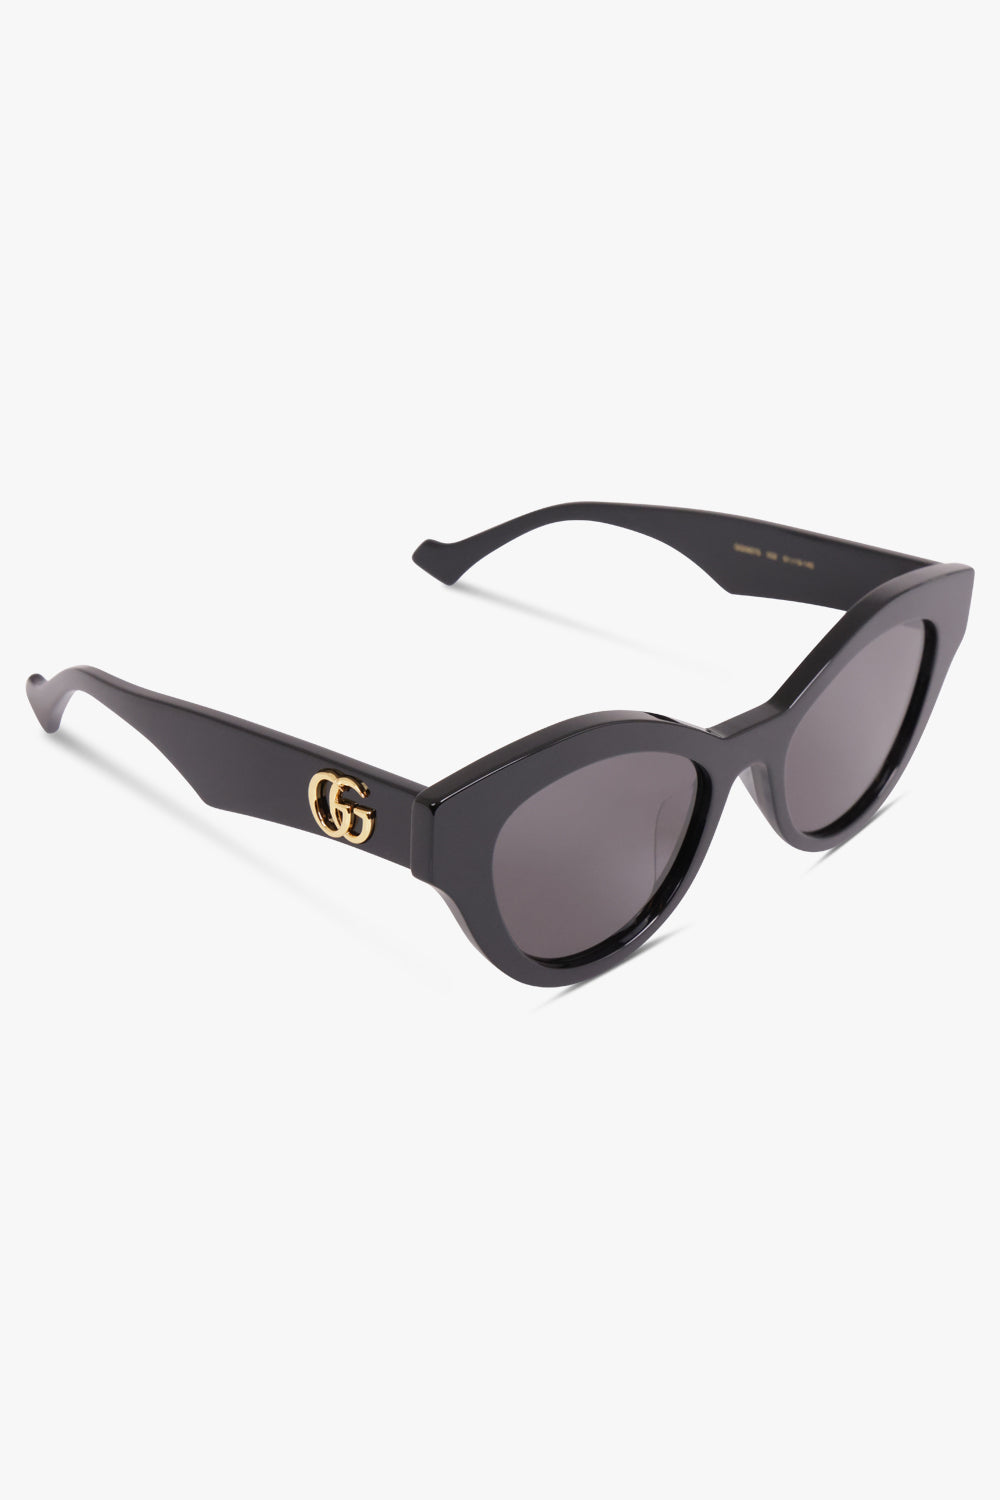 GUCCI ACCESSORIES BLACK / BLACK GG0957S 51 Round Cat Eye Sunglasses | Black